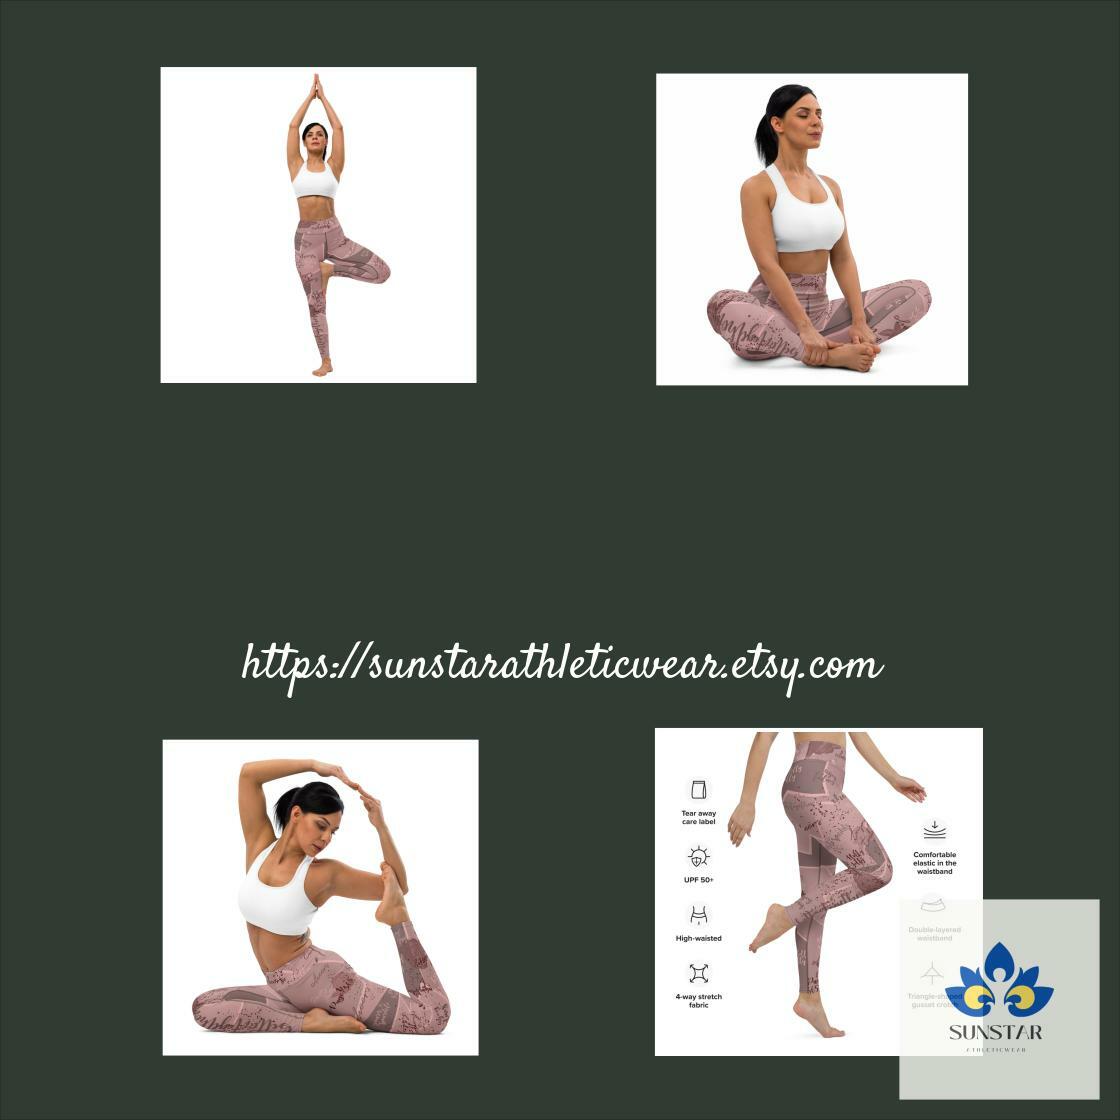 Best Comfortable Yoga Leggings #EasyWear #BestQuality 
$70.00
➤ bit.ly/3JA7XsS